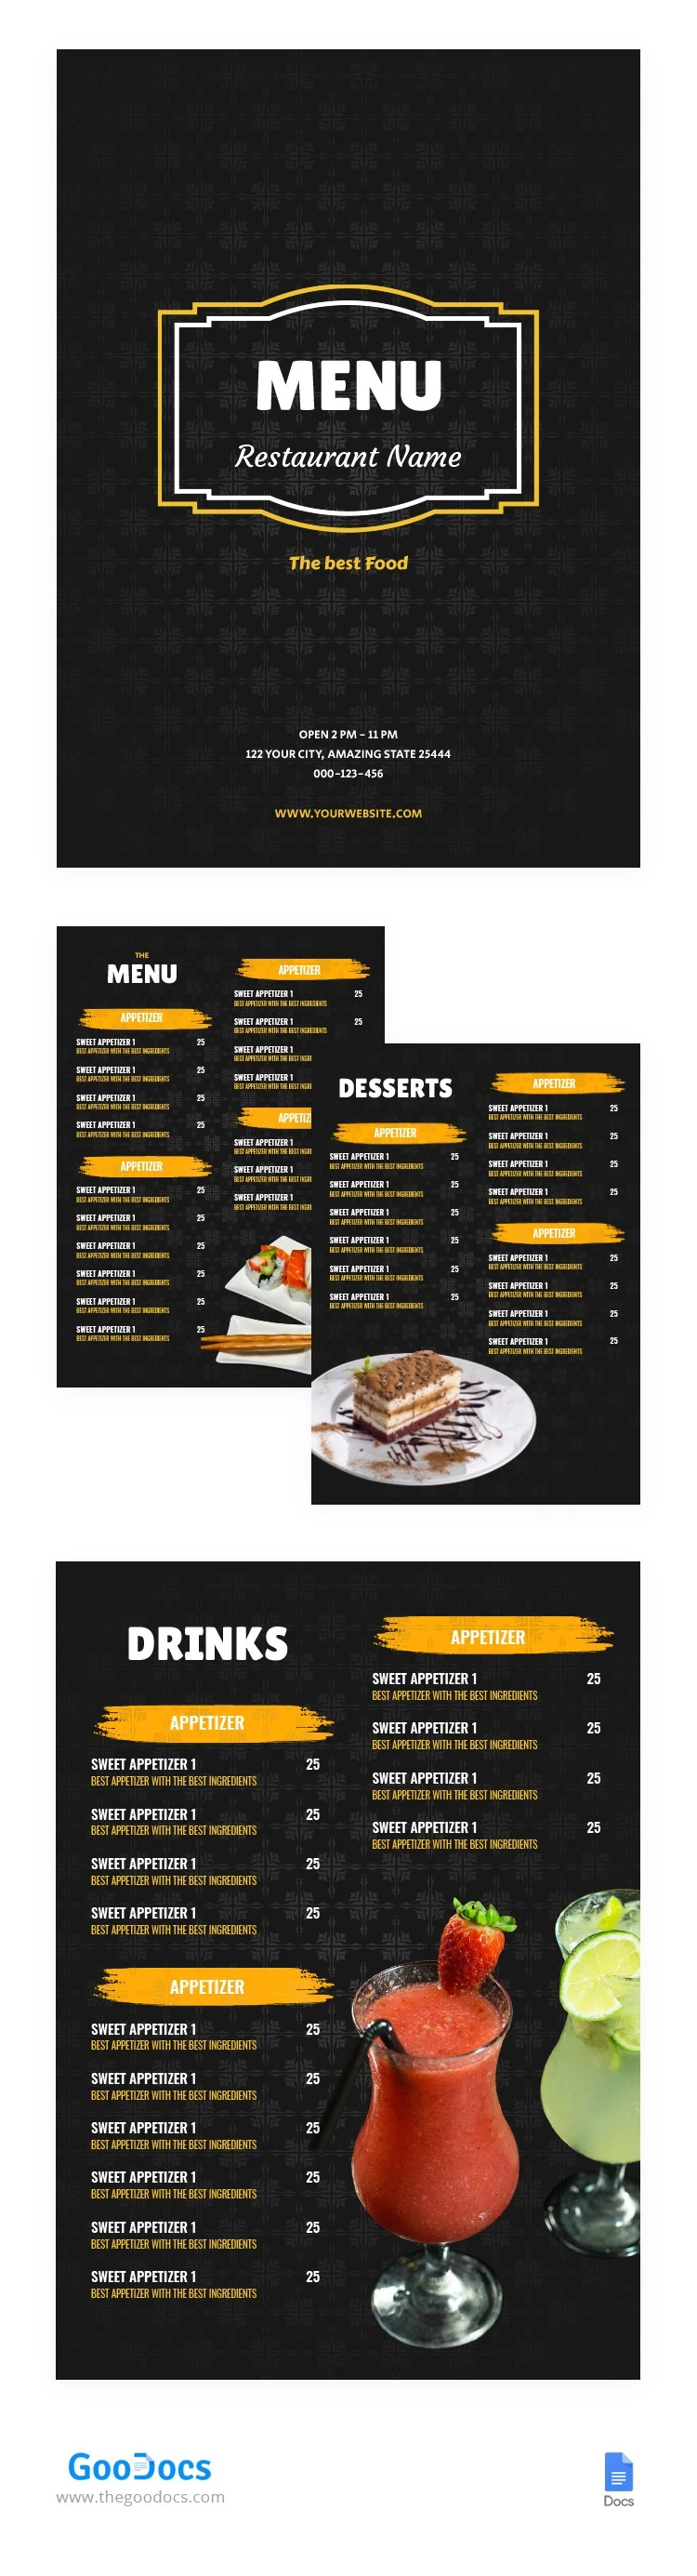 Menú de restaurante elegante en negro - free Google Docs Template - 10062313